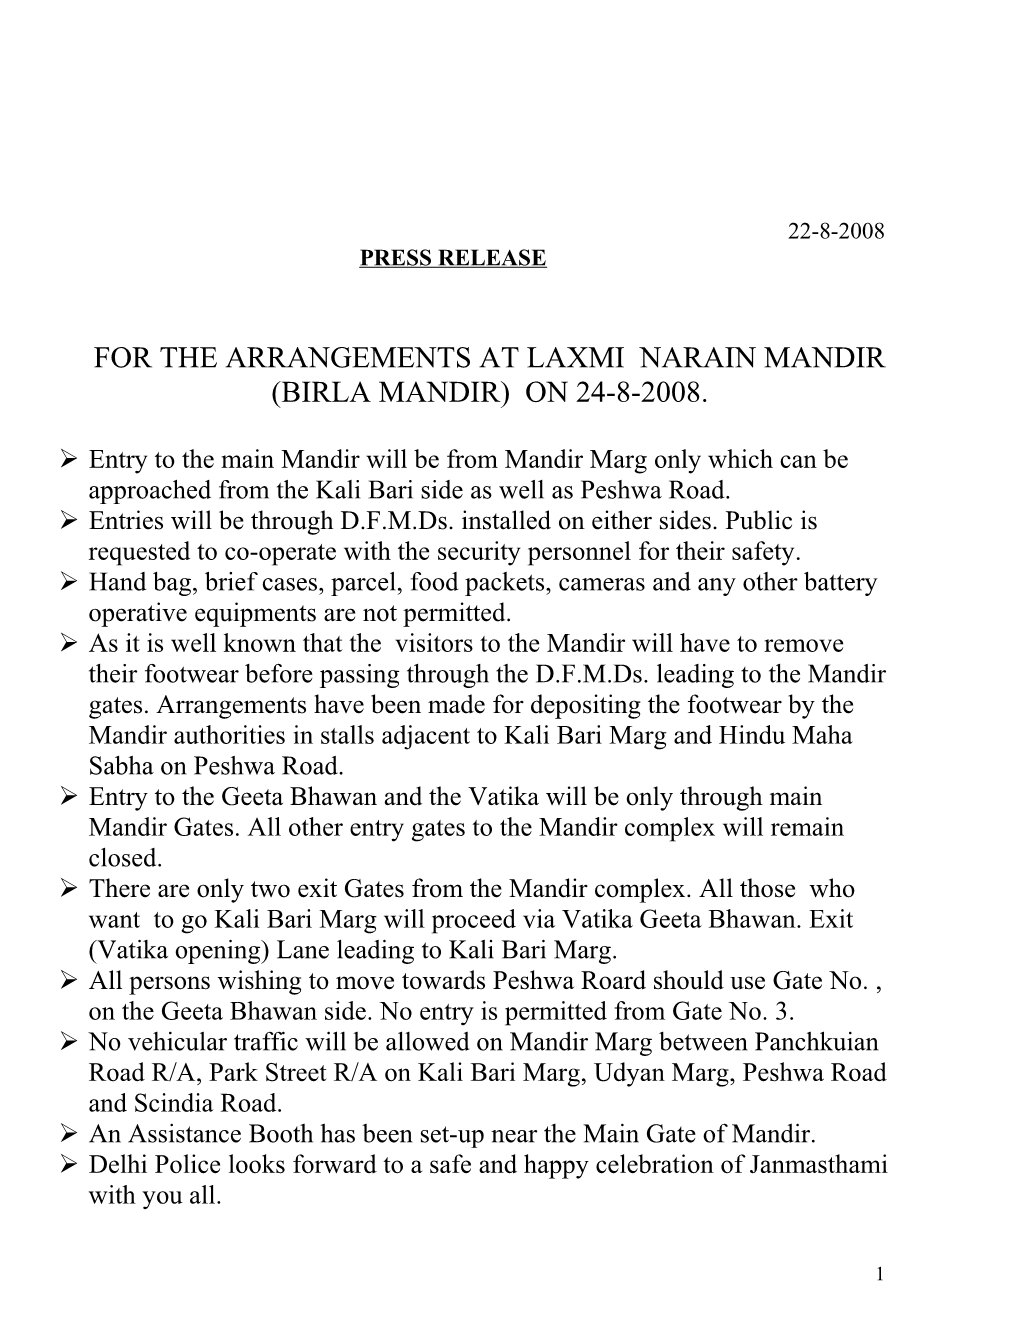 For the Arrangements at Laxmi Narain Mandir (Birla Mandir) on 24-8-2008